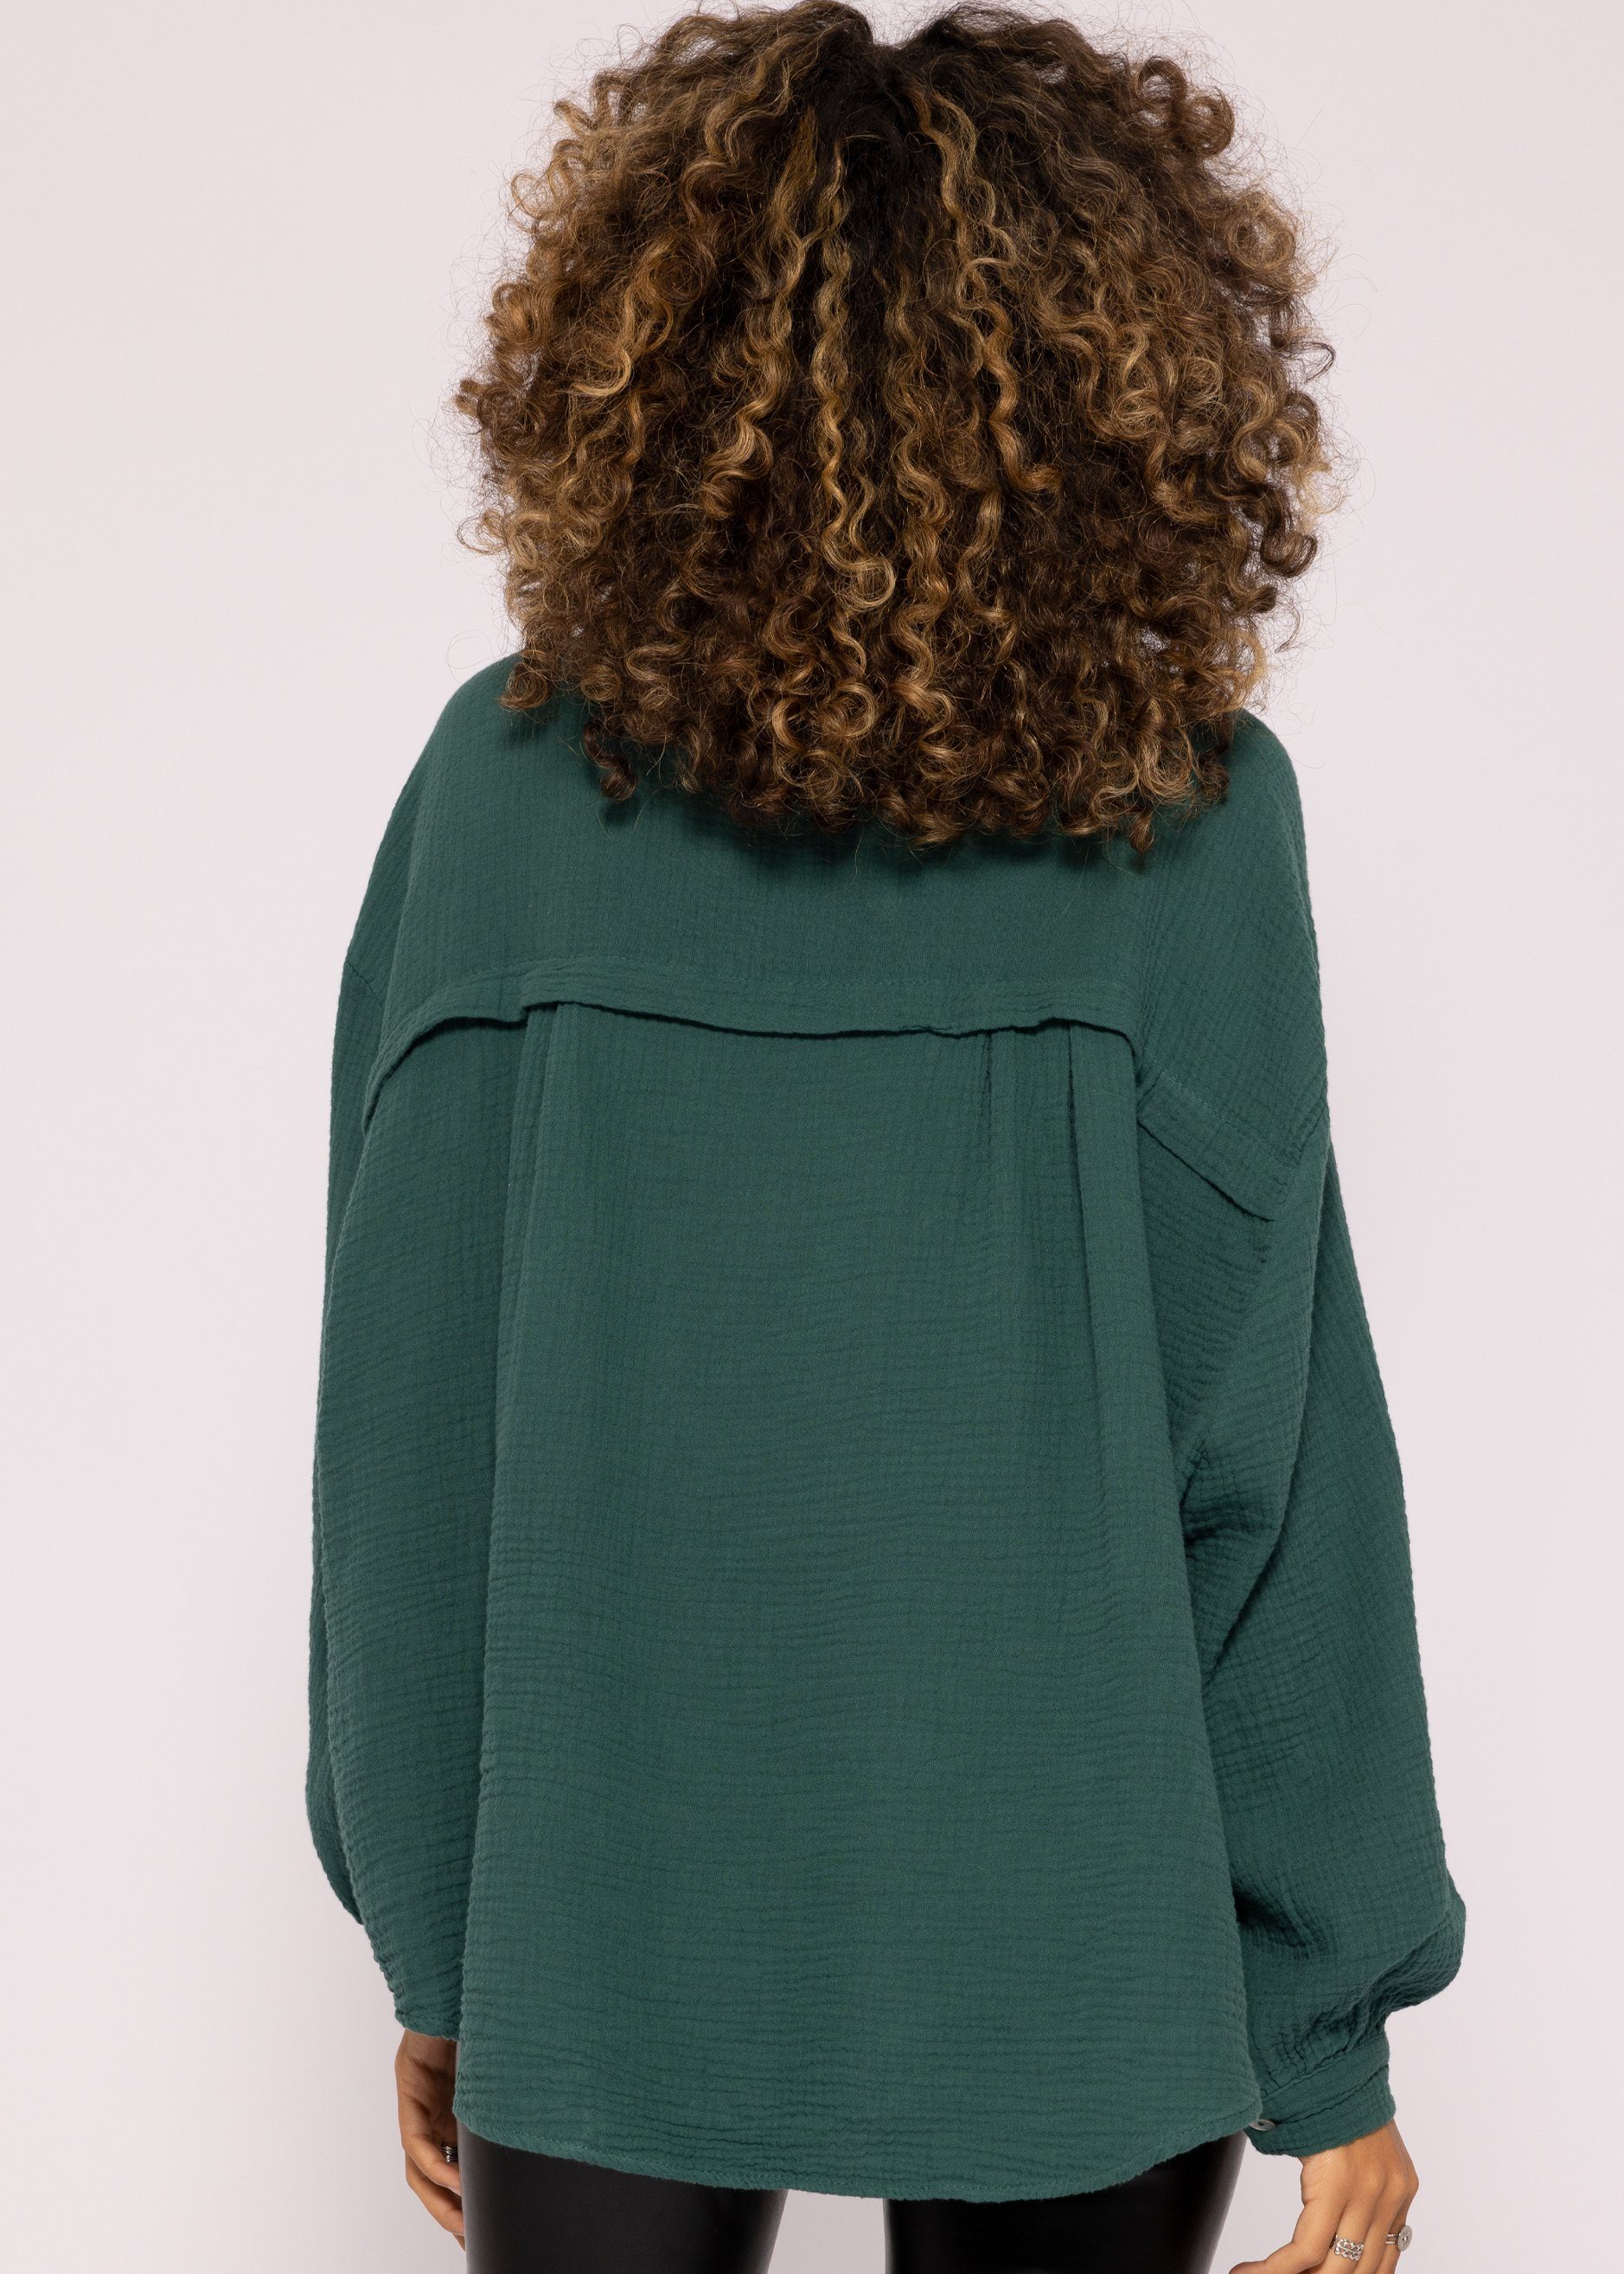 SASSYCLASSY Longbluse Oversize Musselin lang Dunkelgrün Damen V-Ausschnitt, aus Bluse Size 36-48) Baumwolle One (Gr. Hemdbluse mit Langarm